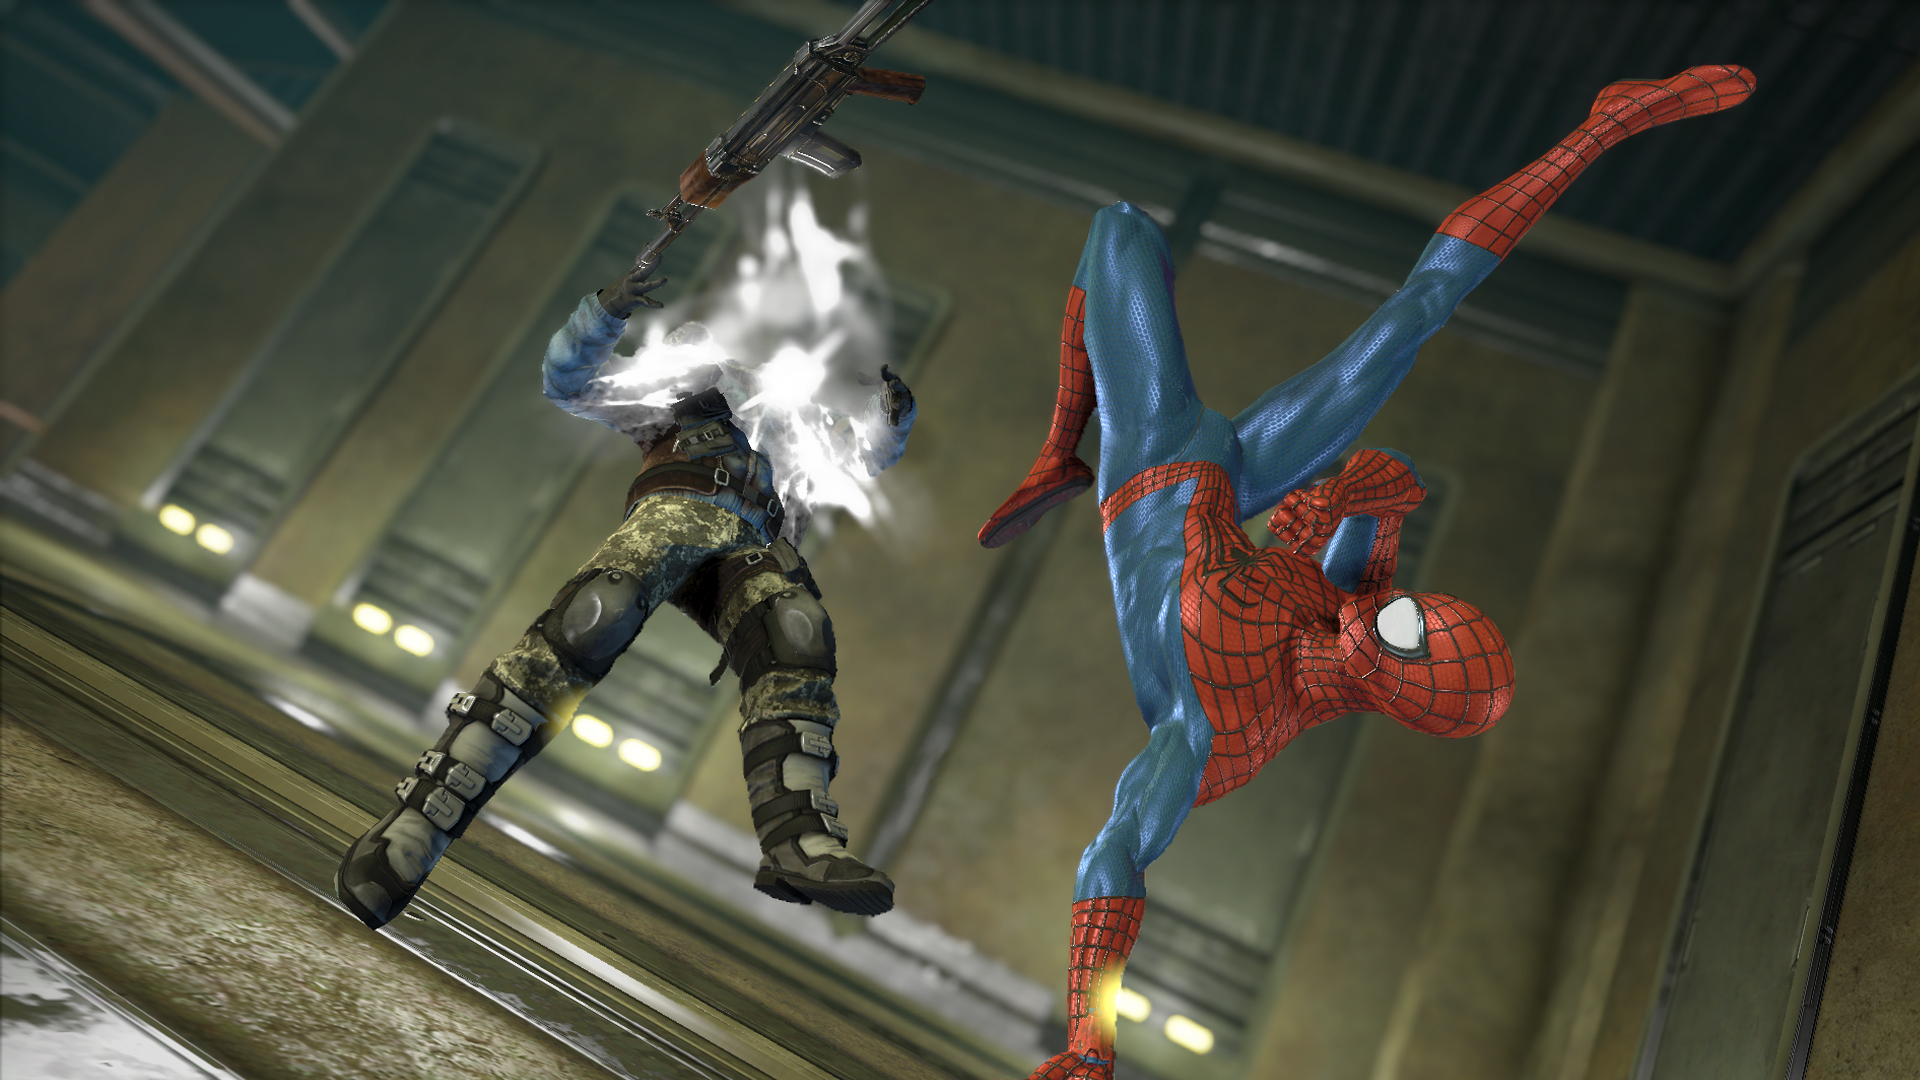 Трейлер игры паук. Spider man игра. Spider-man 2 (игра). The amazing Spider-man игра 2014. The amazing Spider-man 2 игра 2012.